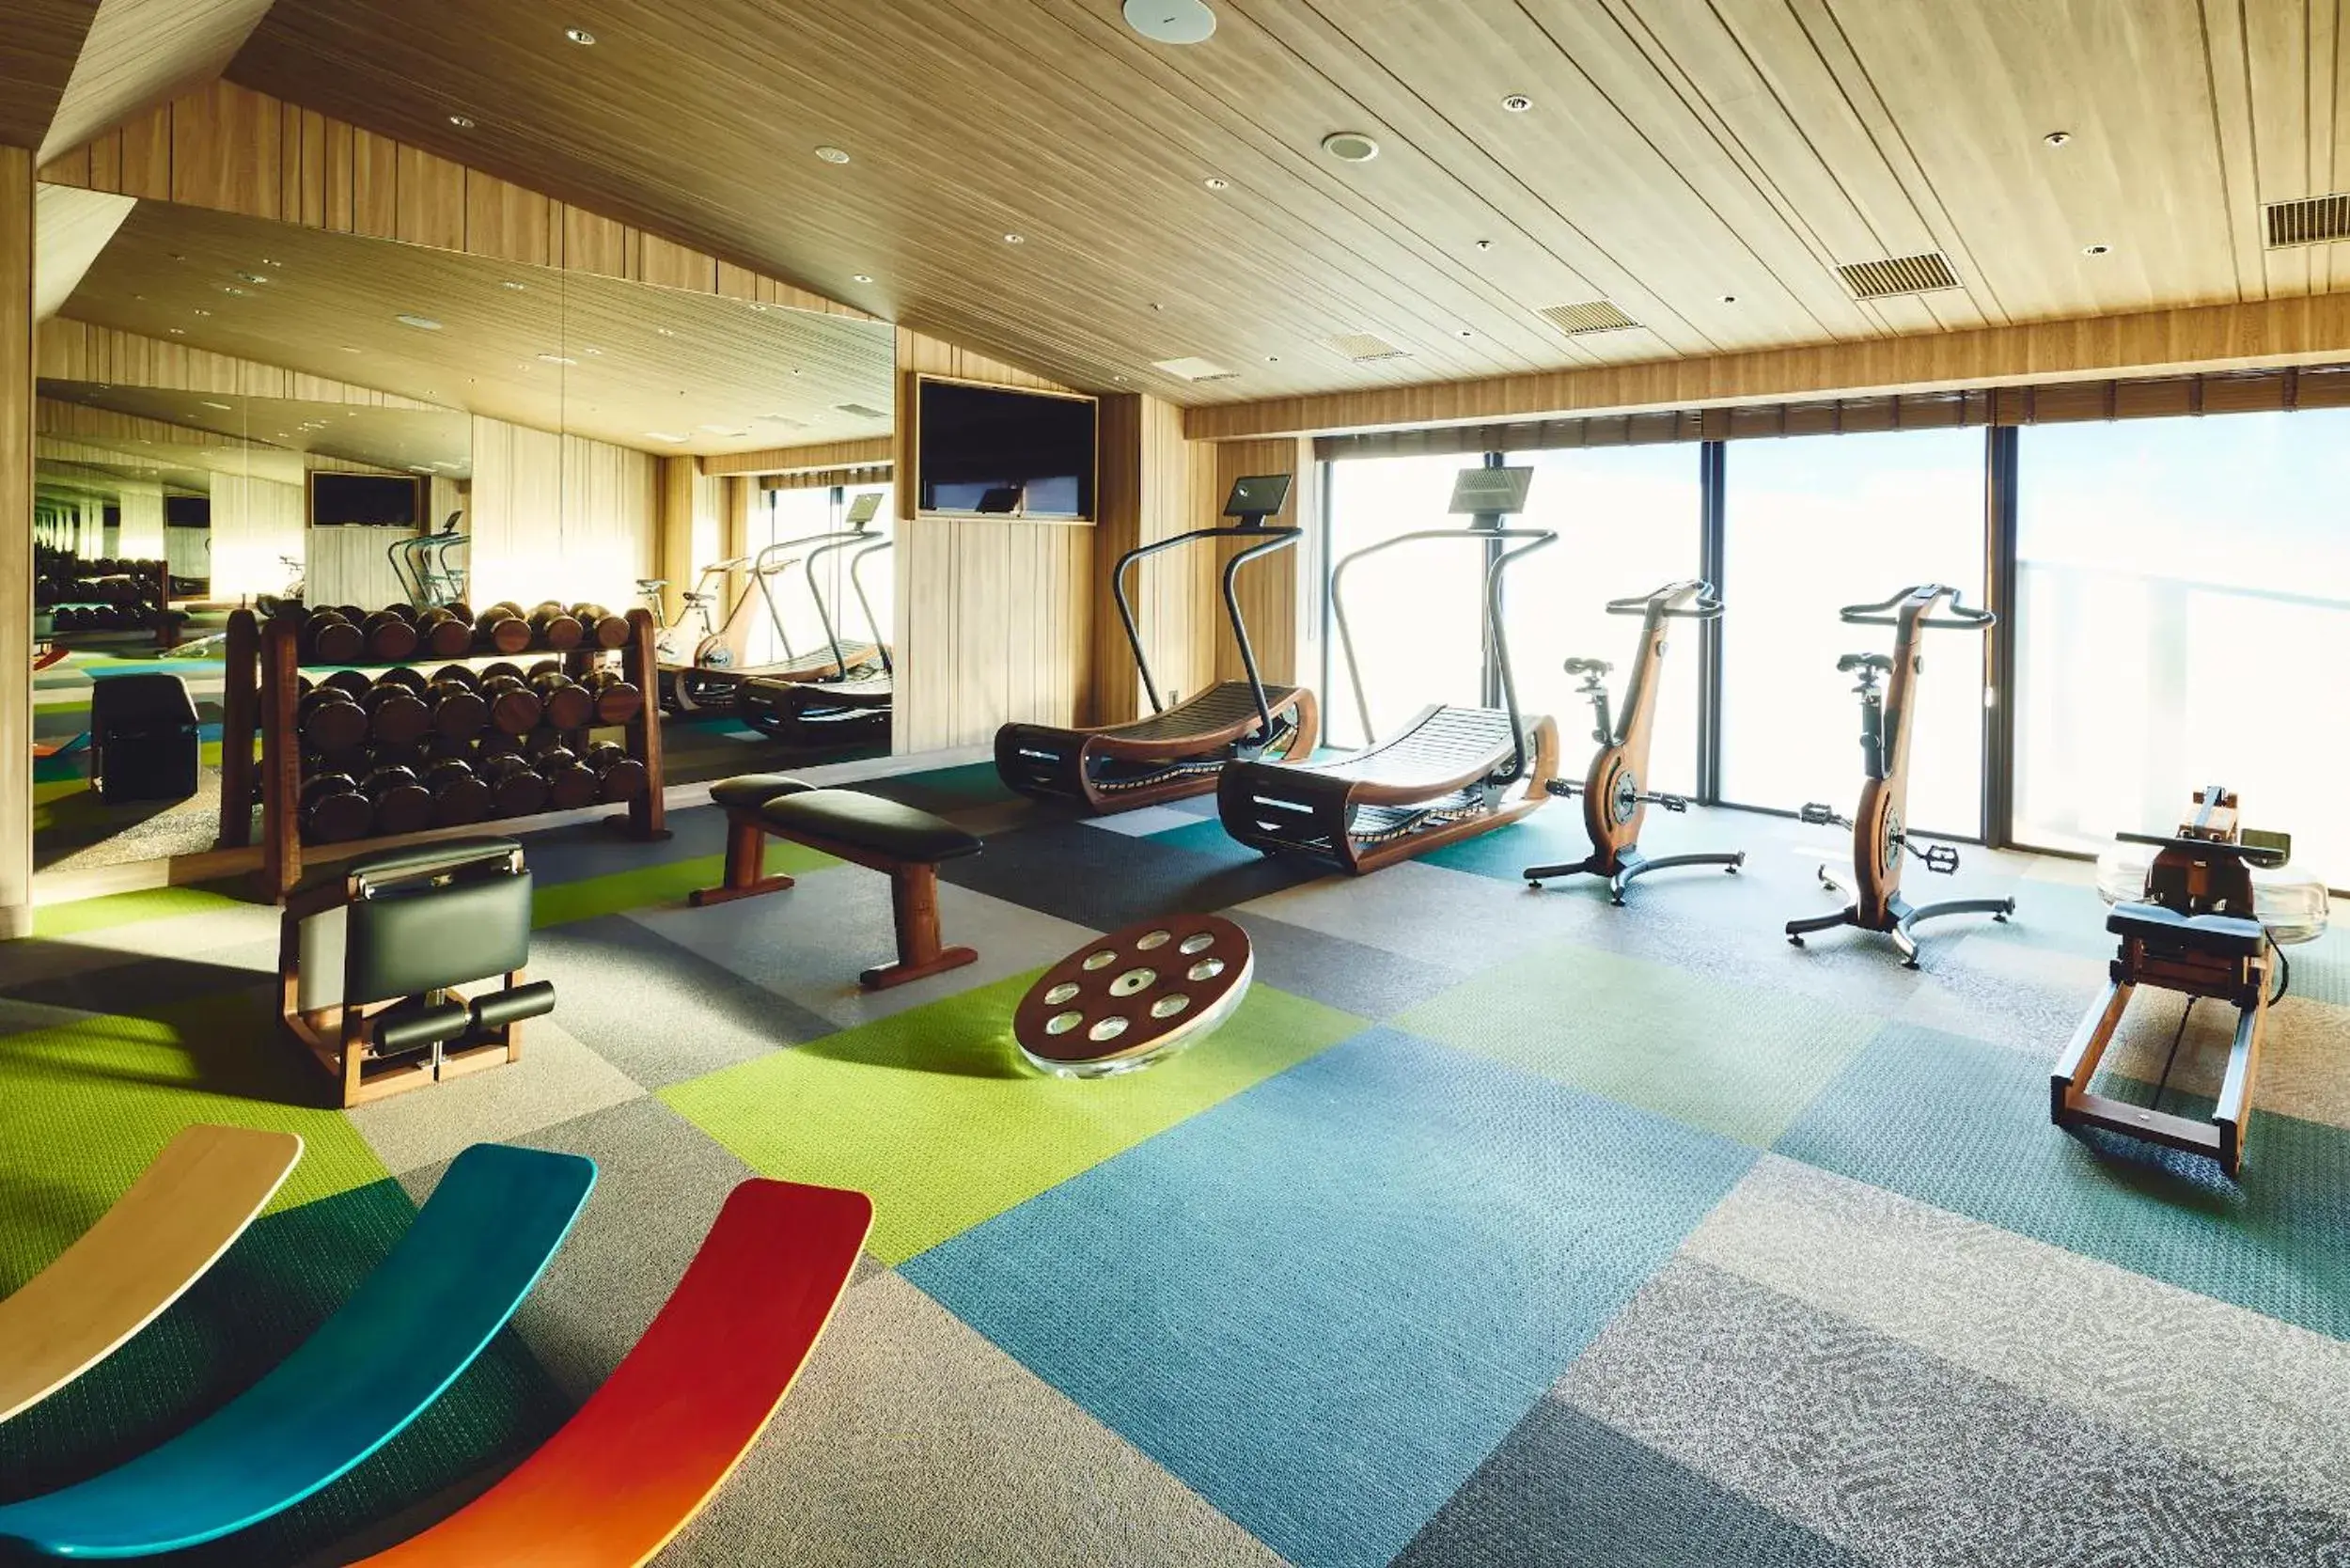 Fitness centre/facilities, Fitness Center/Facilities in Hotel Indigo Karuizawa